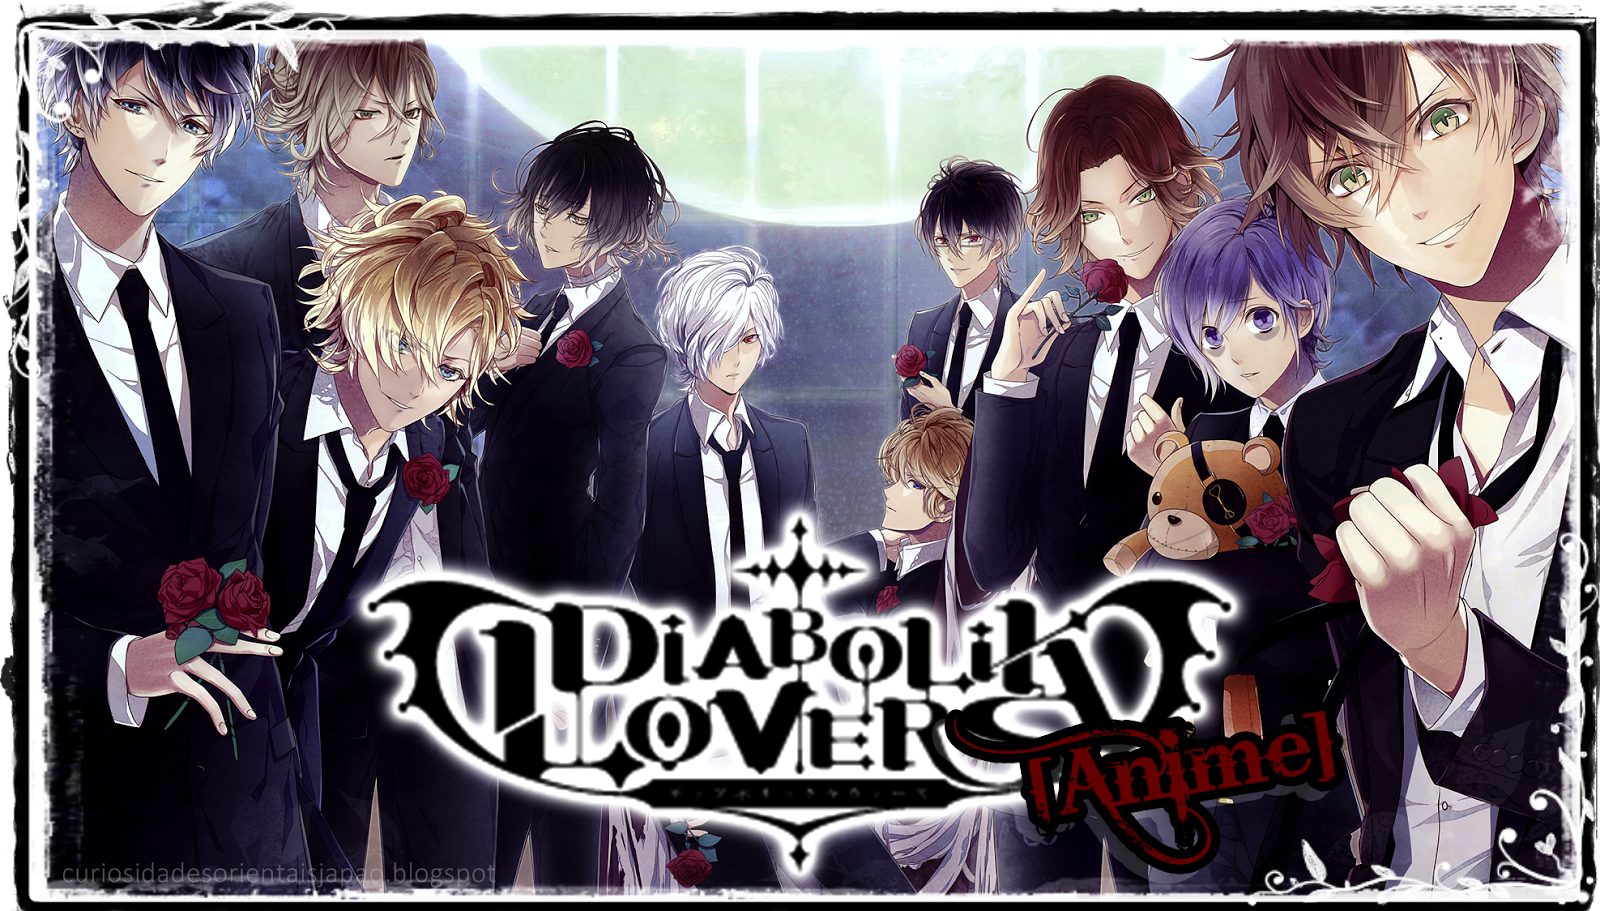 diabolik lovers  Amantes diabolik, Anime de romance, Anime